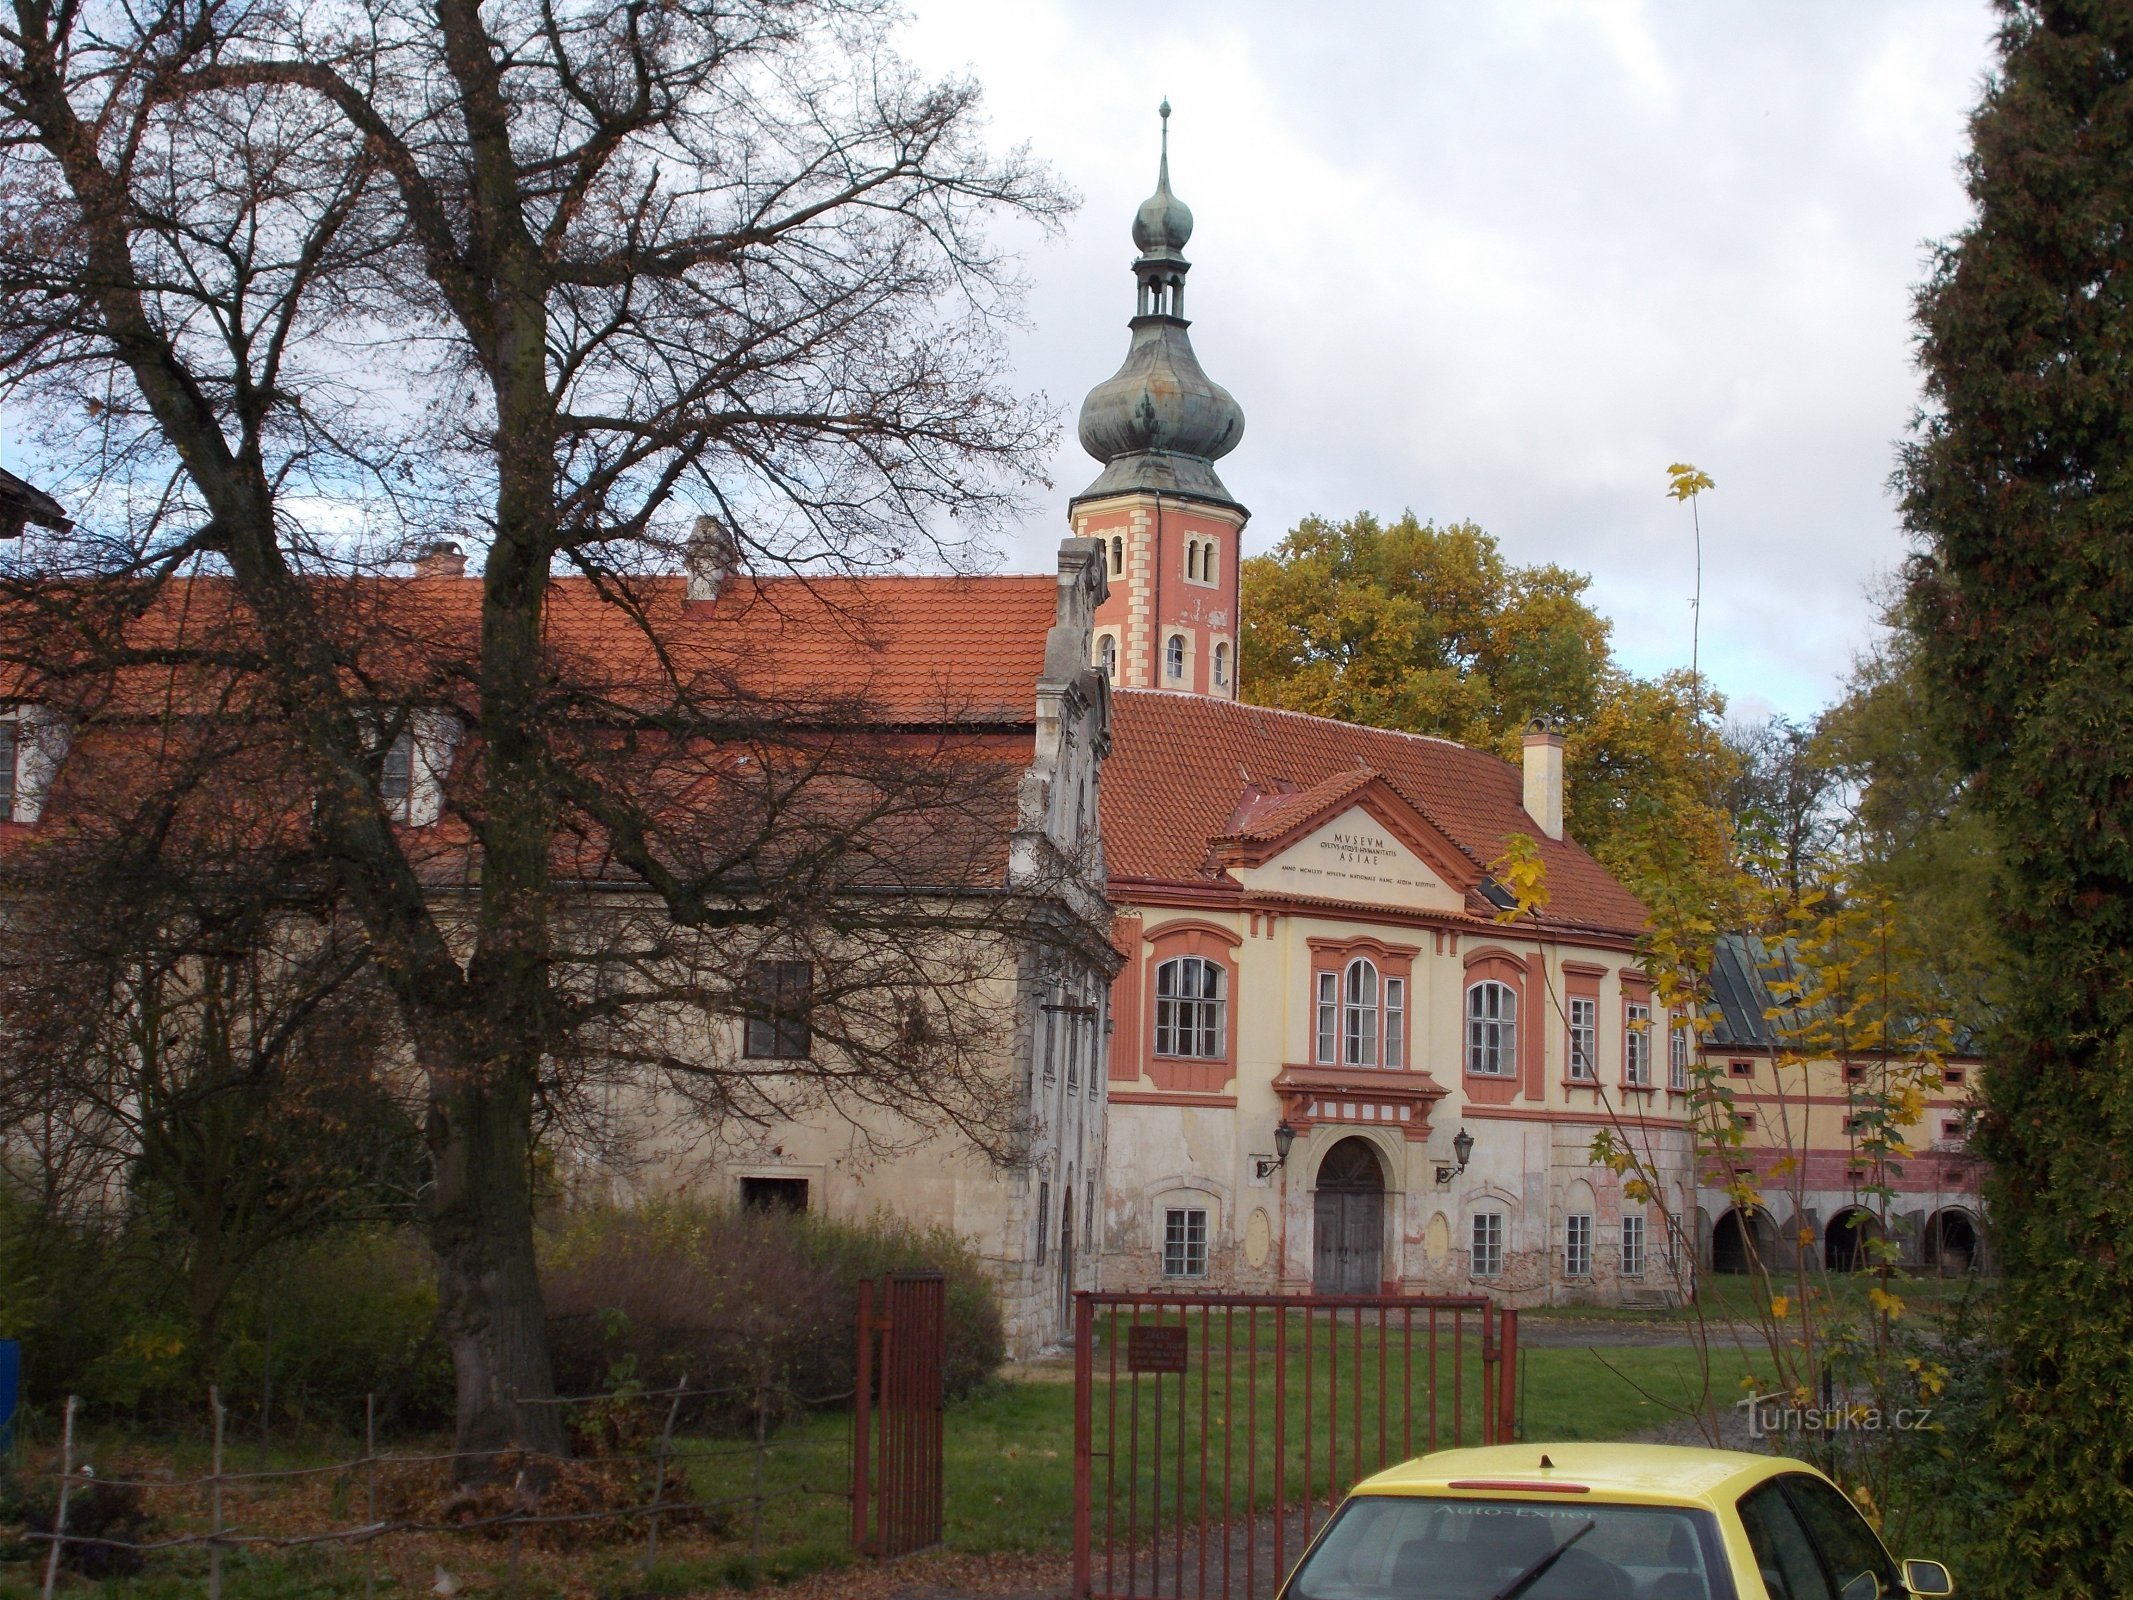 Castelo de Liběchov